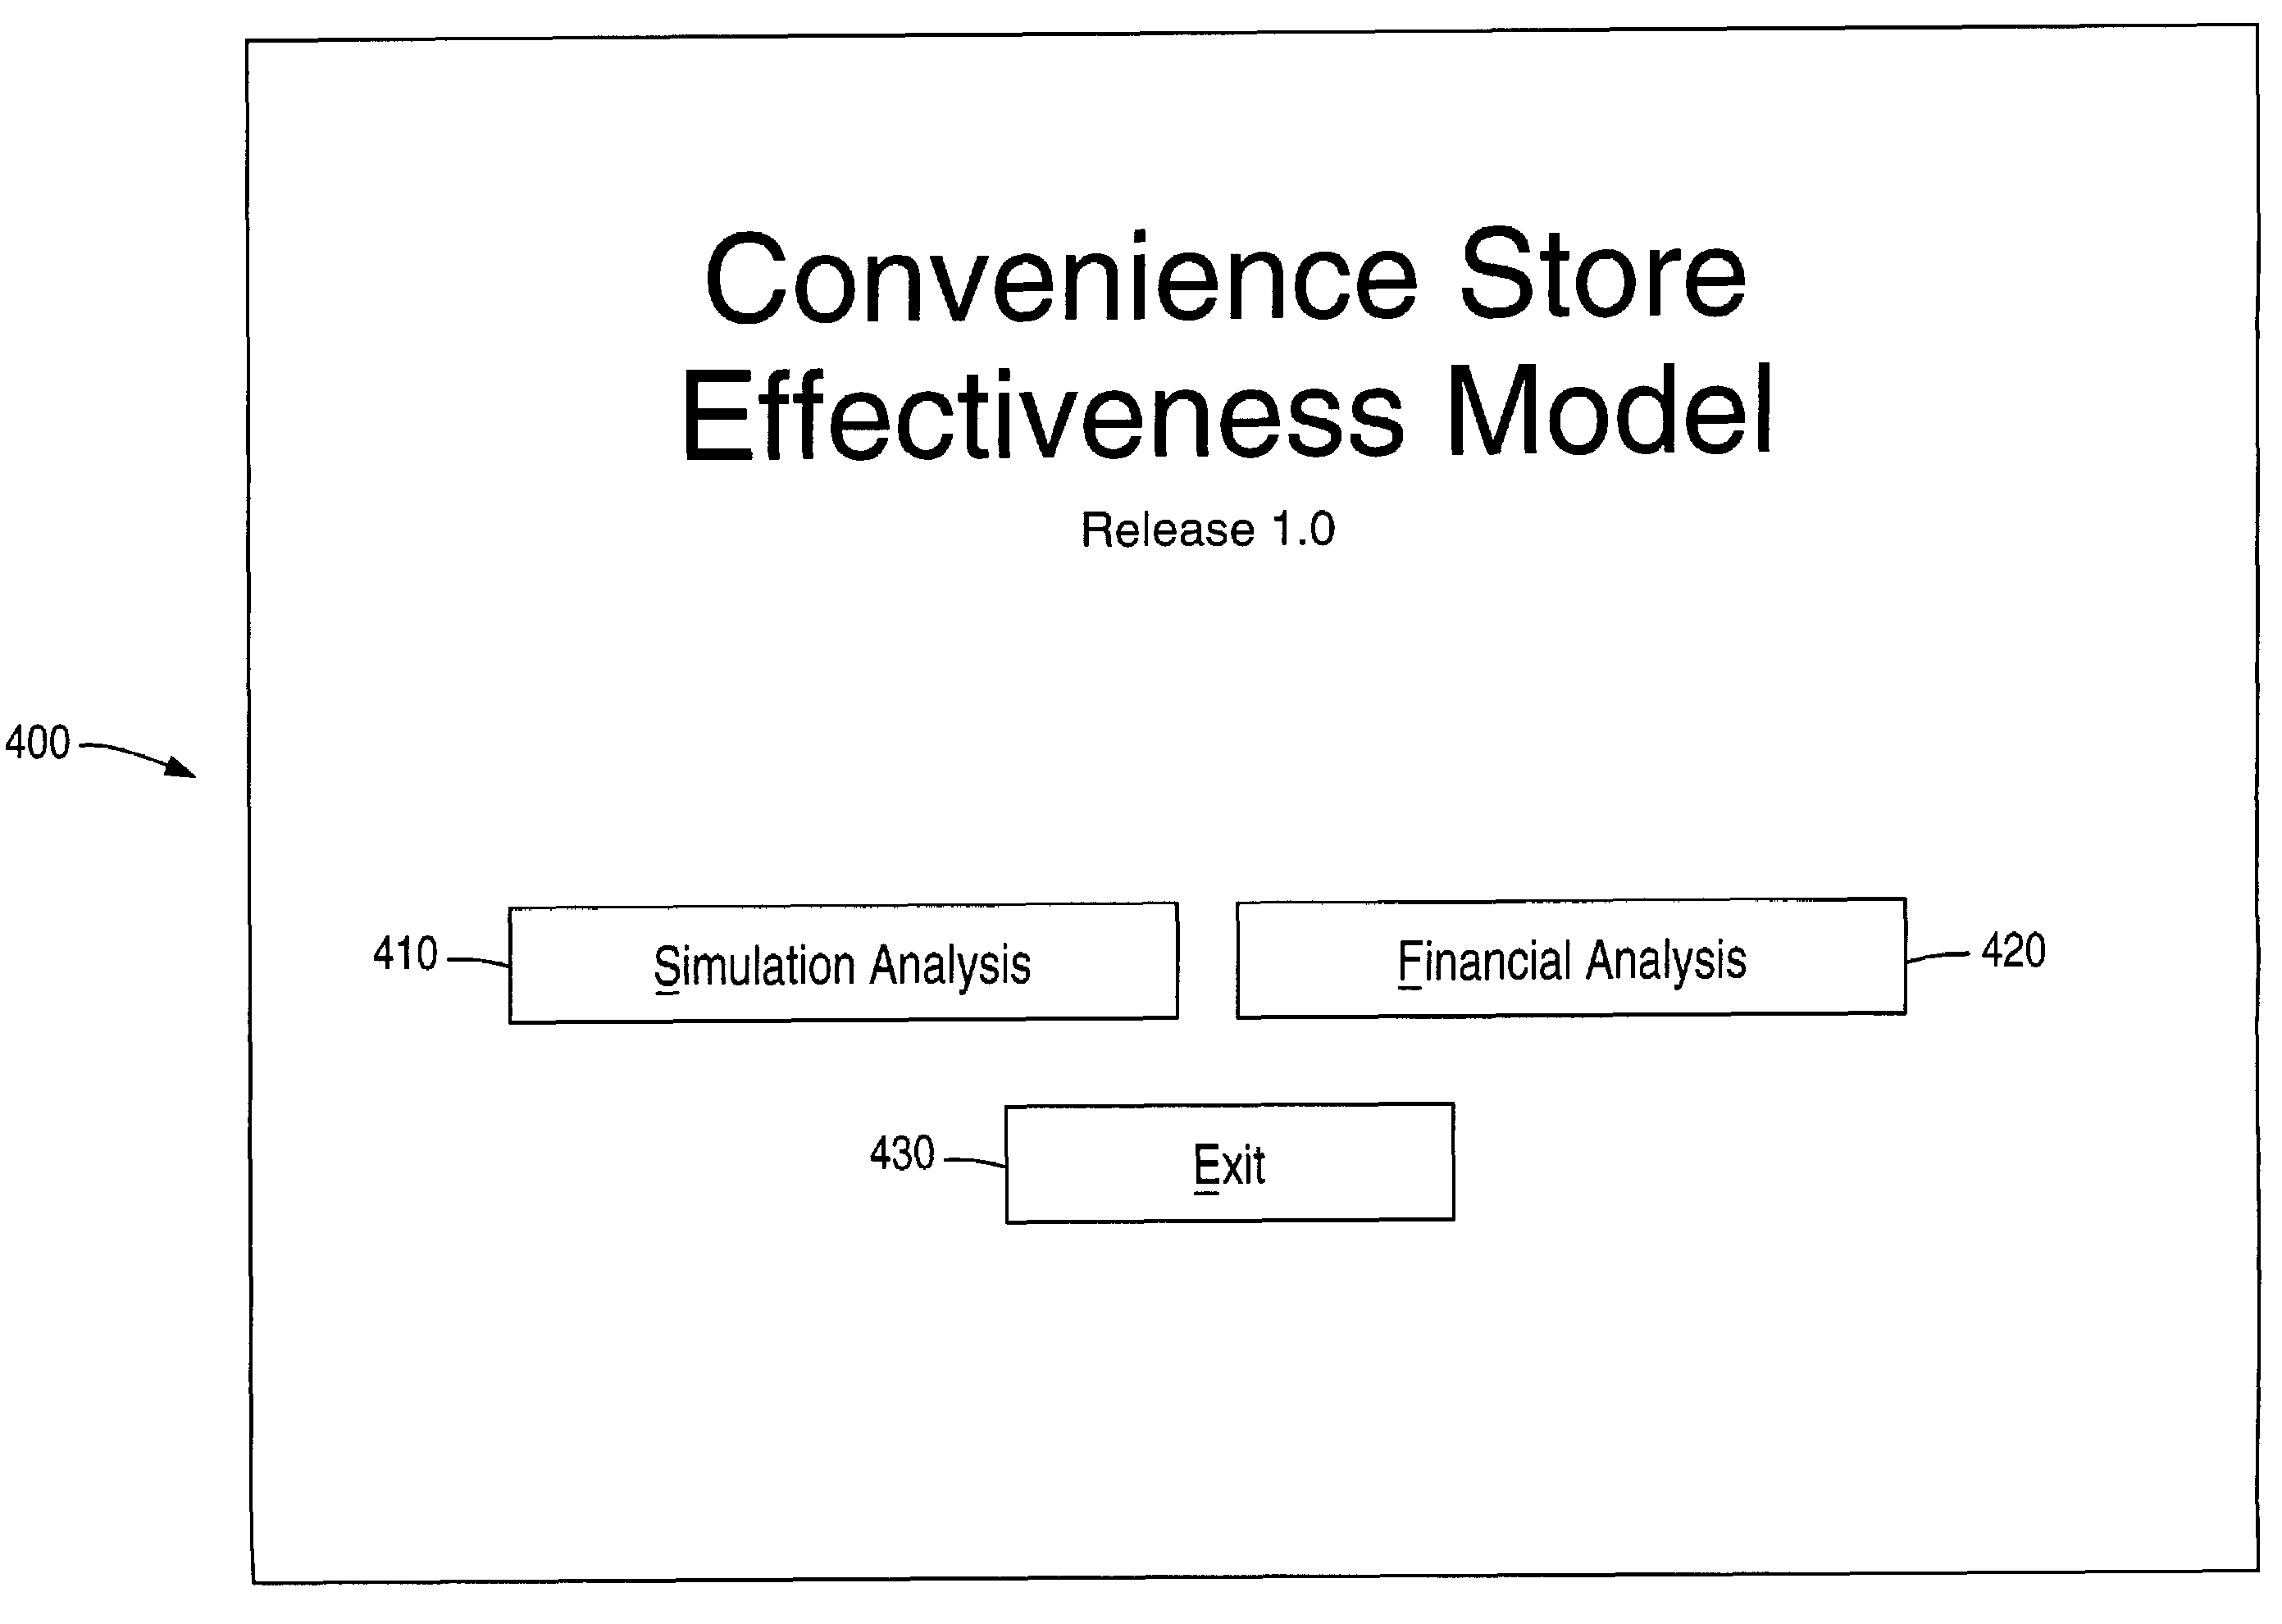 Convenience store effectiveness model (CSEM)